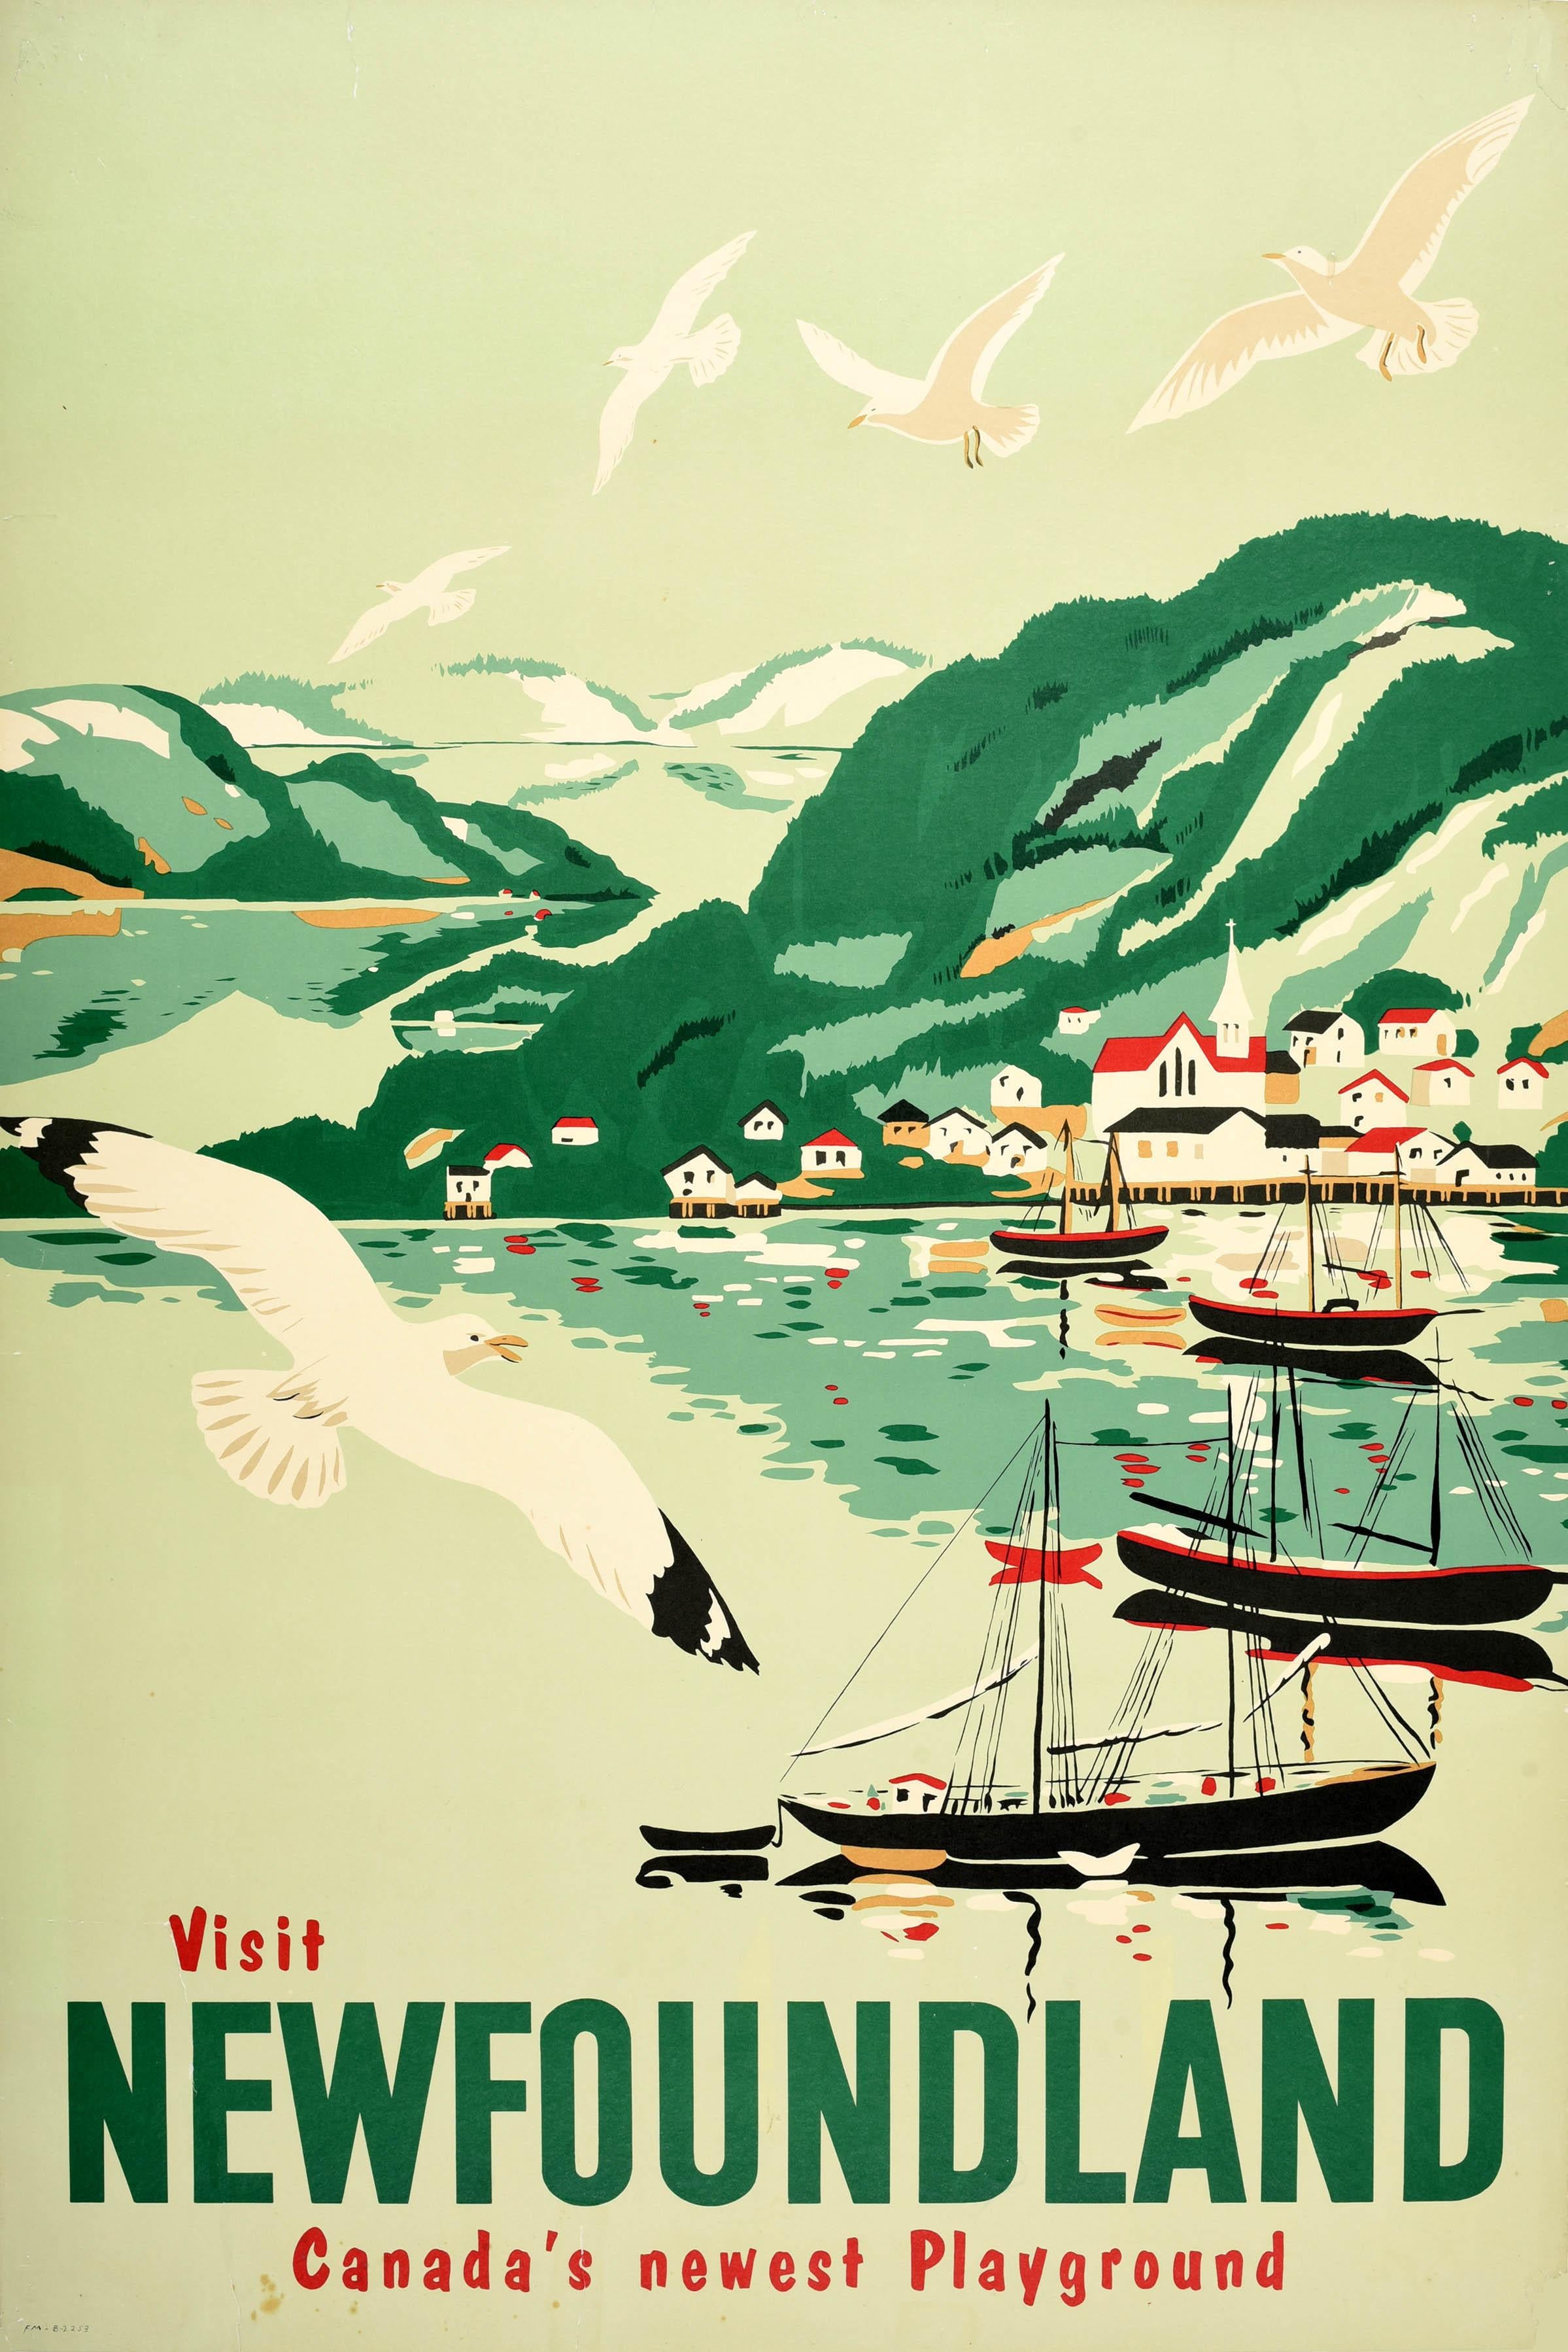 Unknown Print - Original Vintage Travel Poster Visit Newfoundland Canada Playground Harbour Art